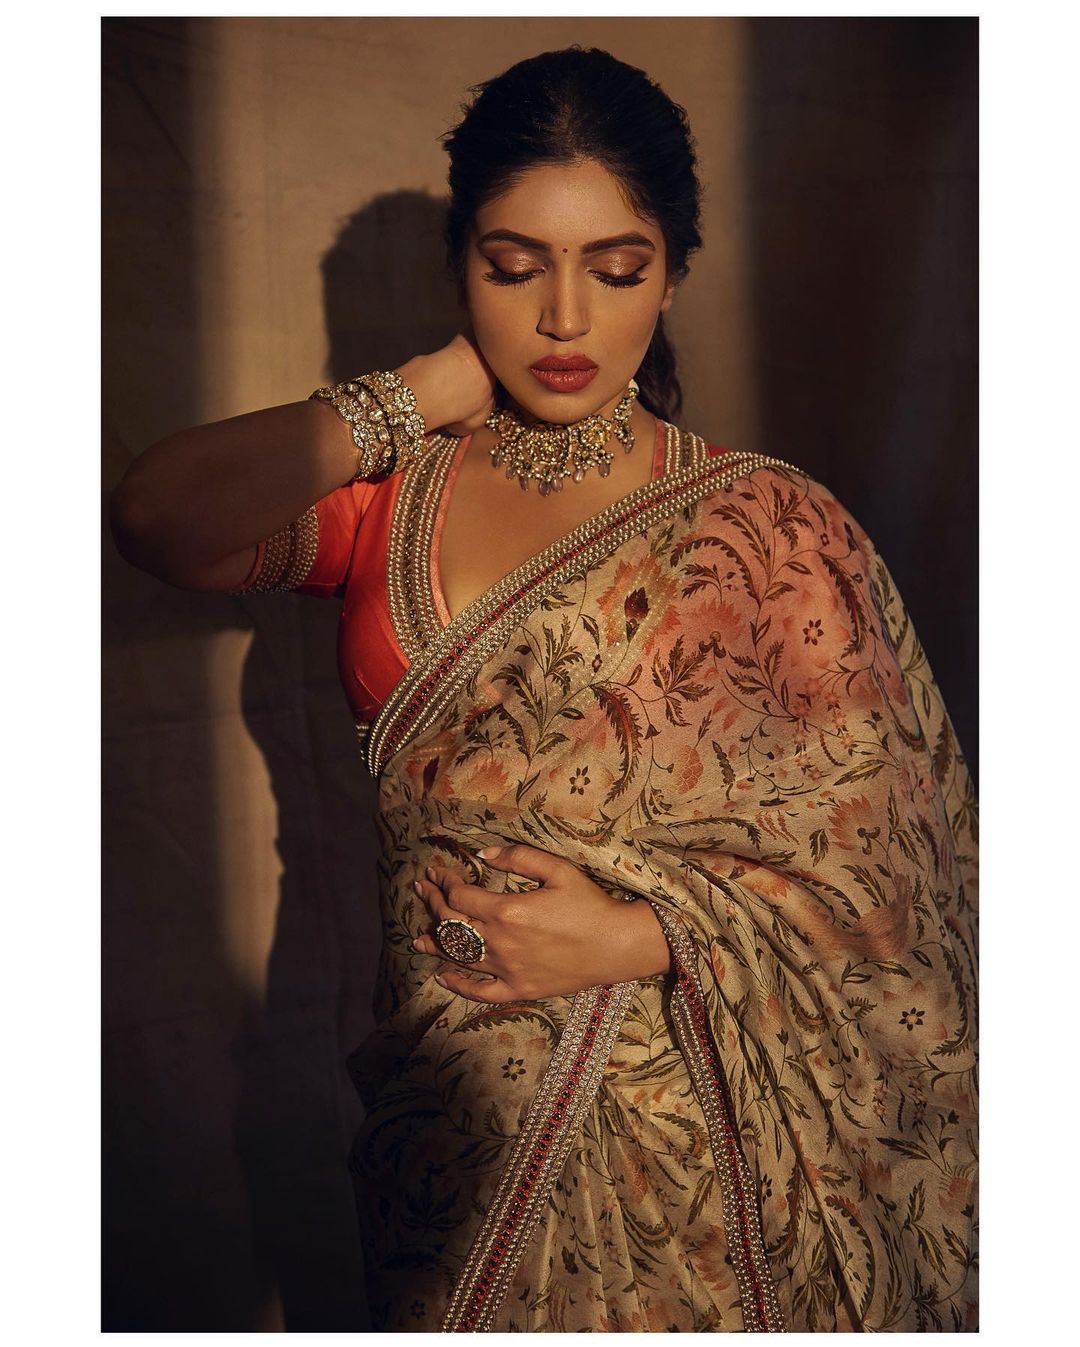 Bhumi Pednekar looks elegant in the printed saree